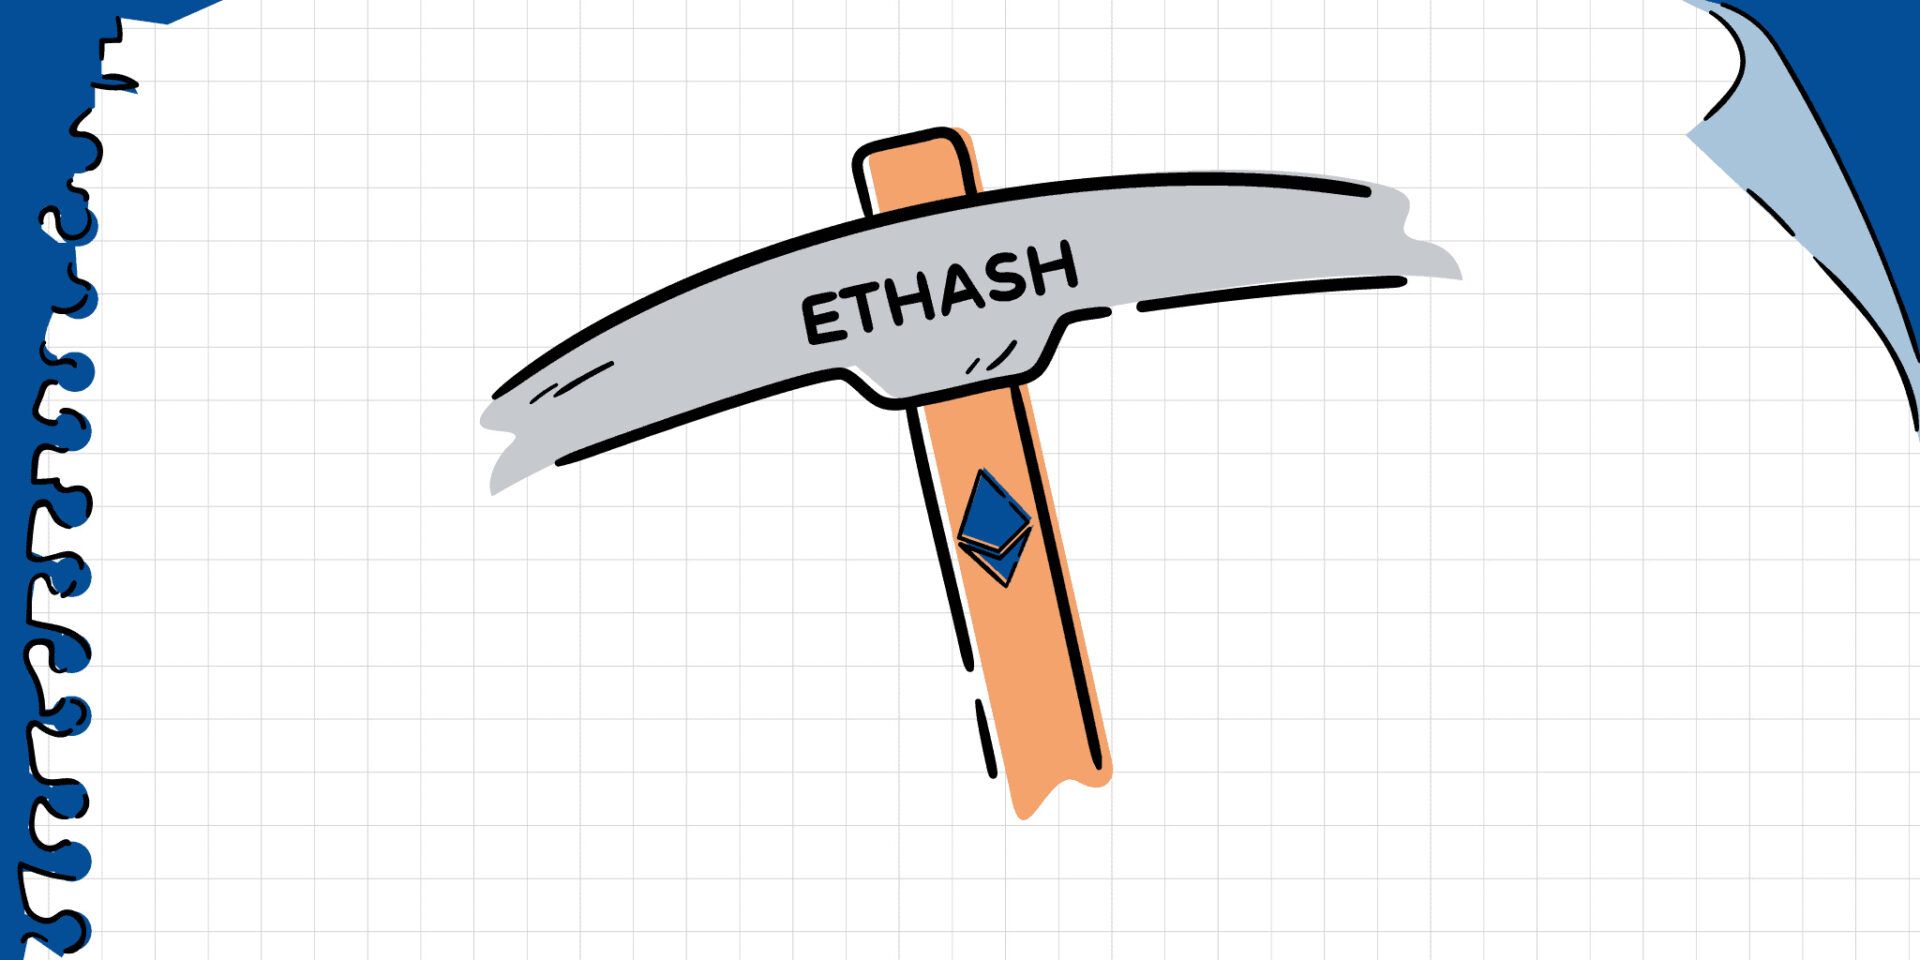 ETHASH - Cryptomining - ETH